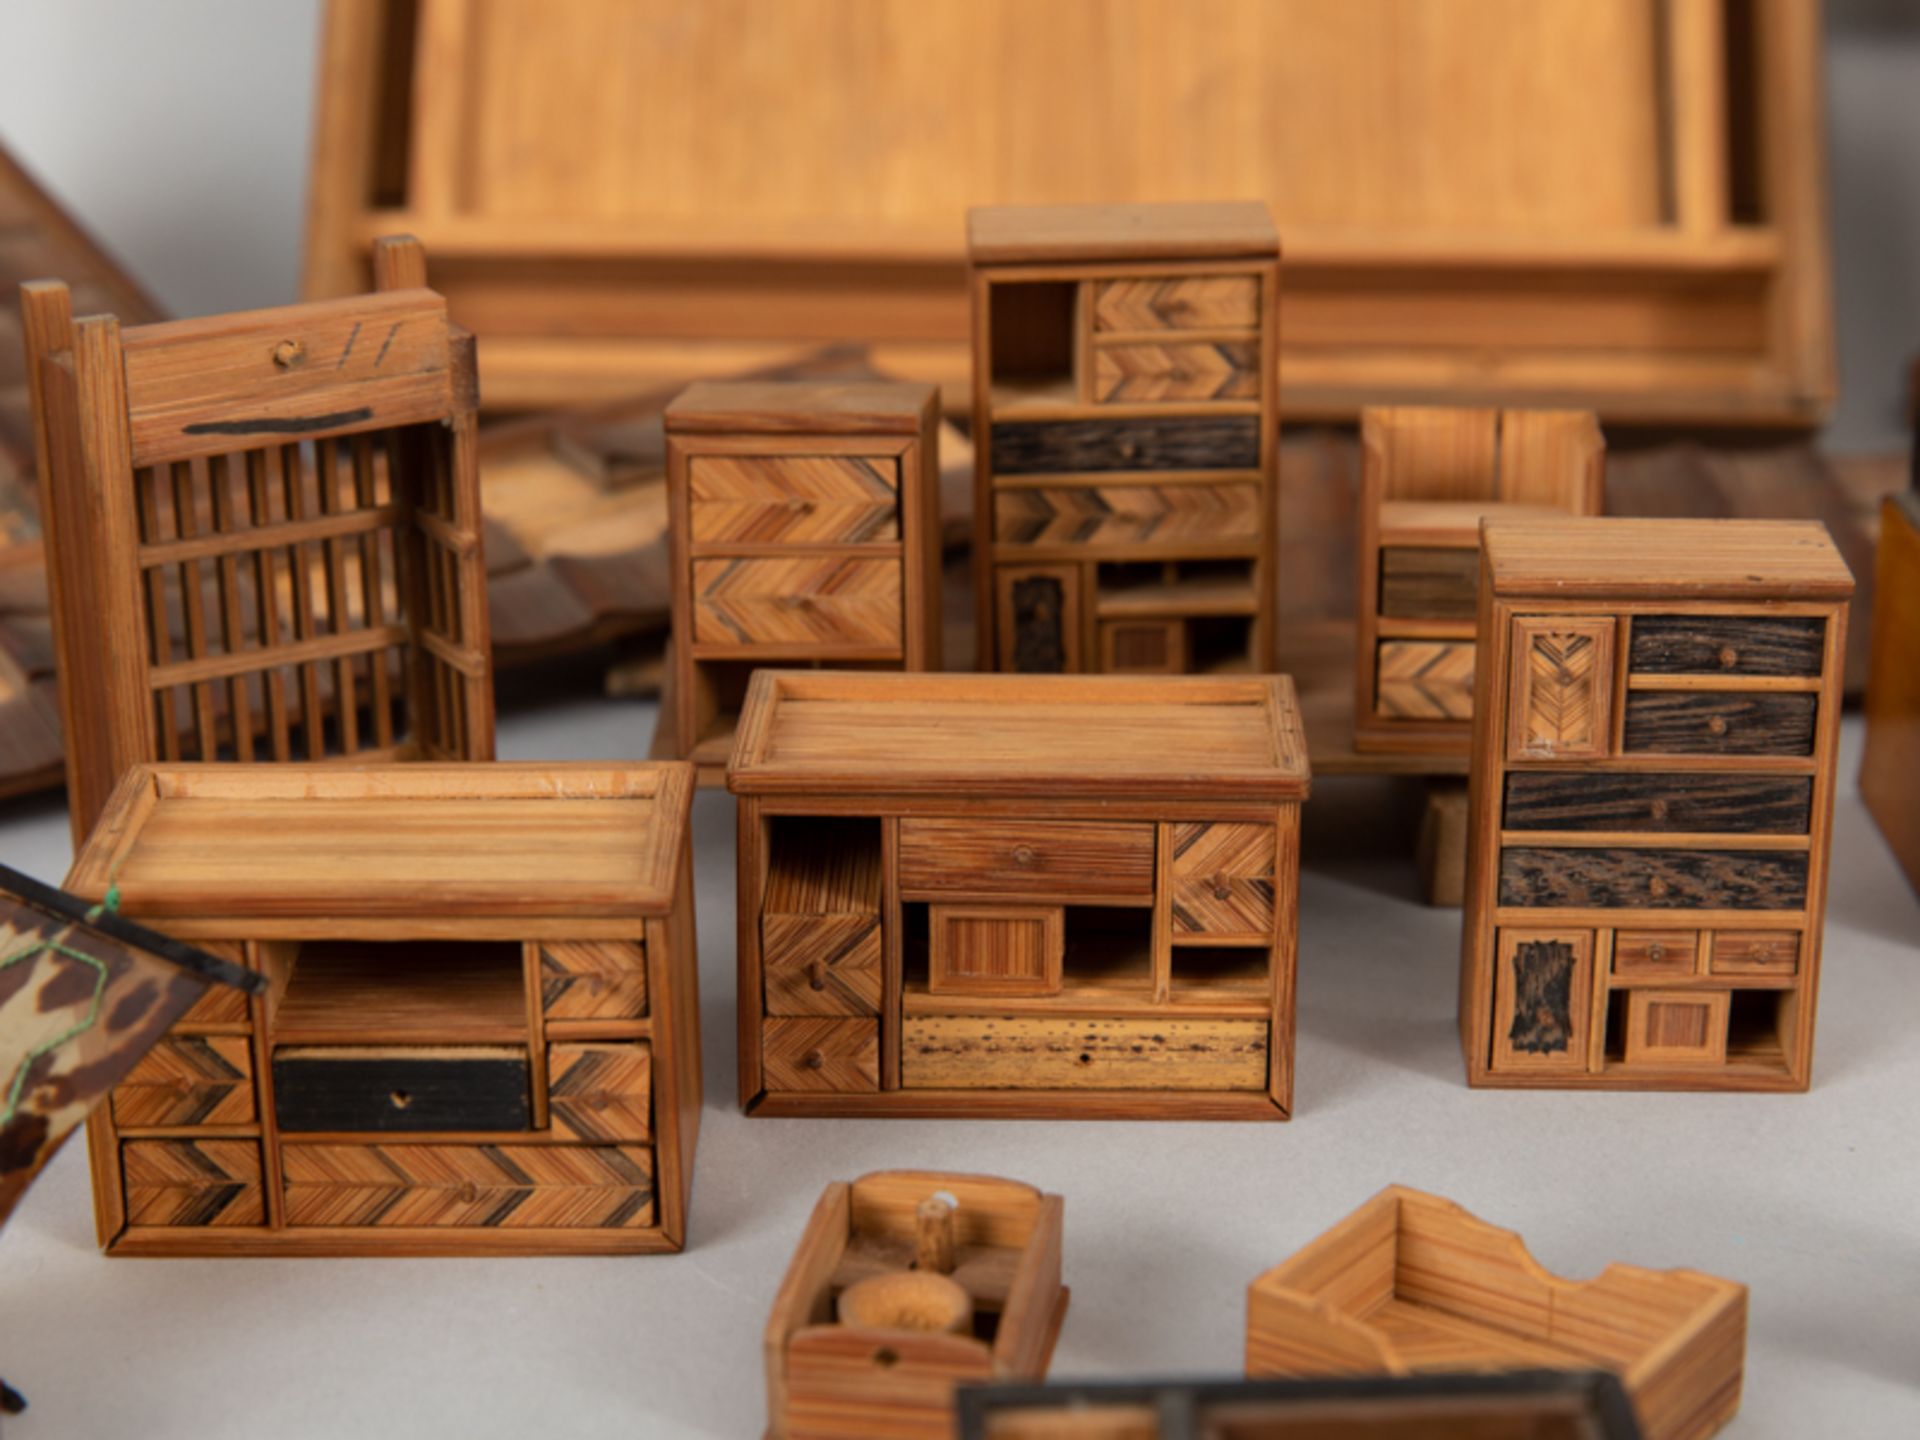 Modellhaus aus Holz / Kinderspielzeug, Japan, Meiji Zeit. - Image 8 of 22